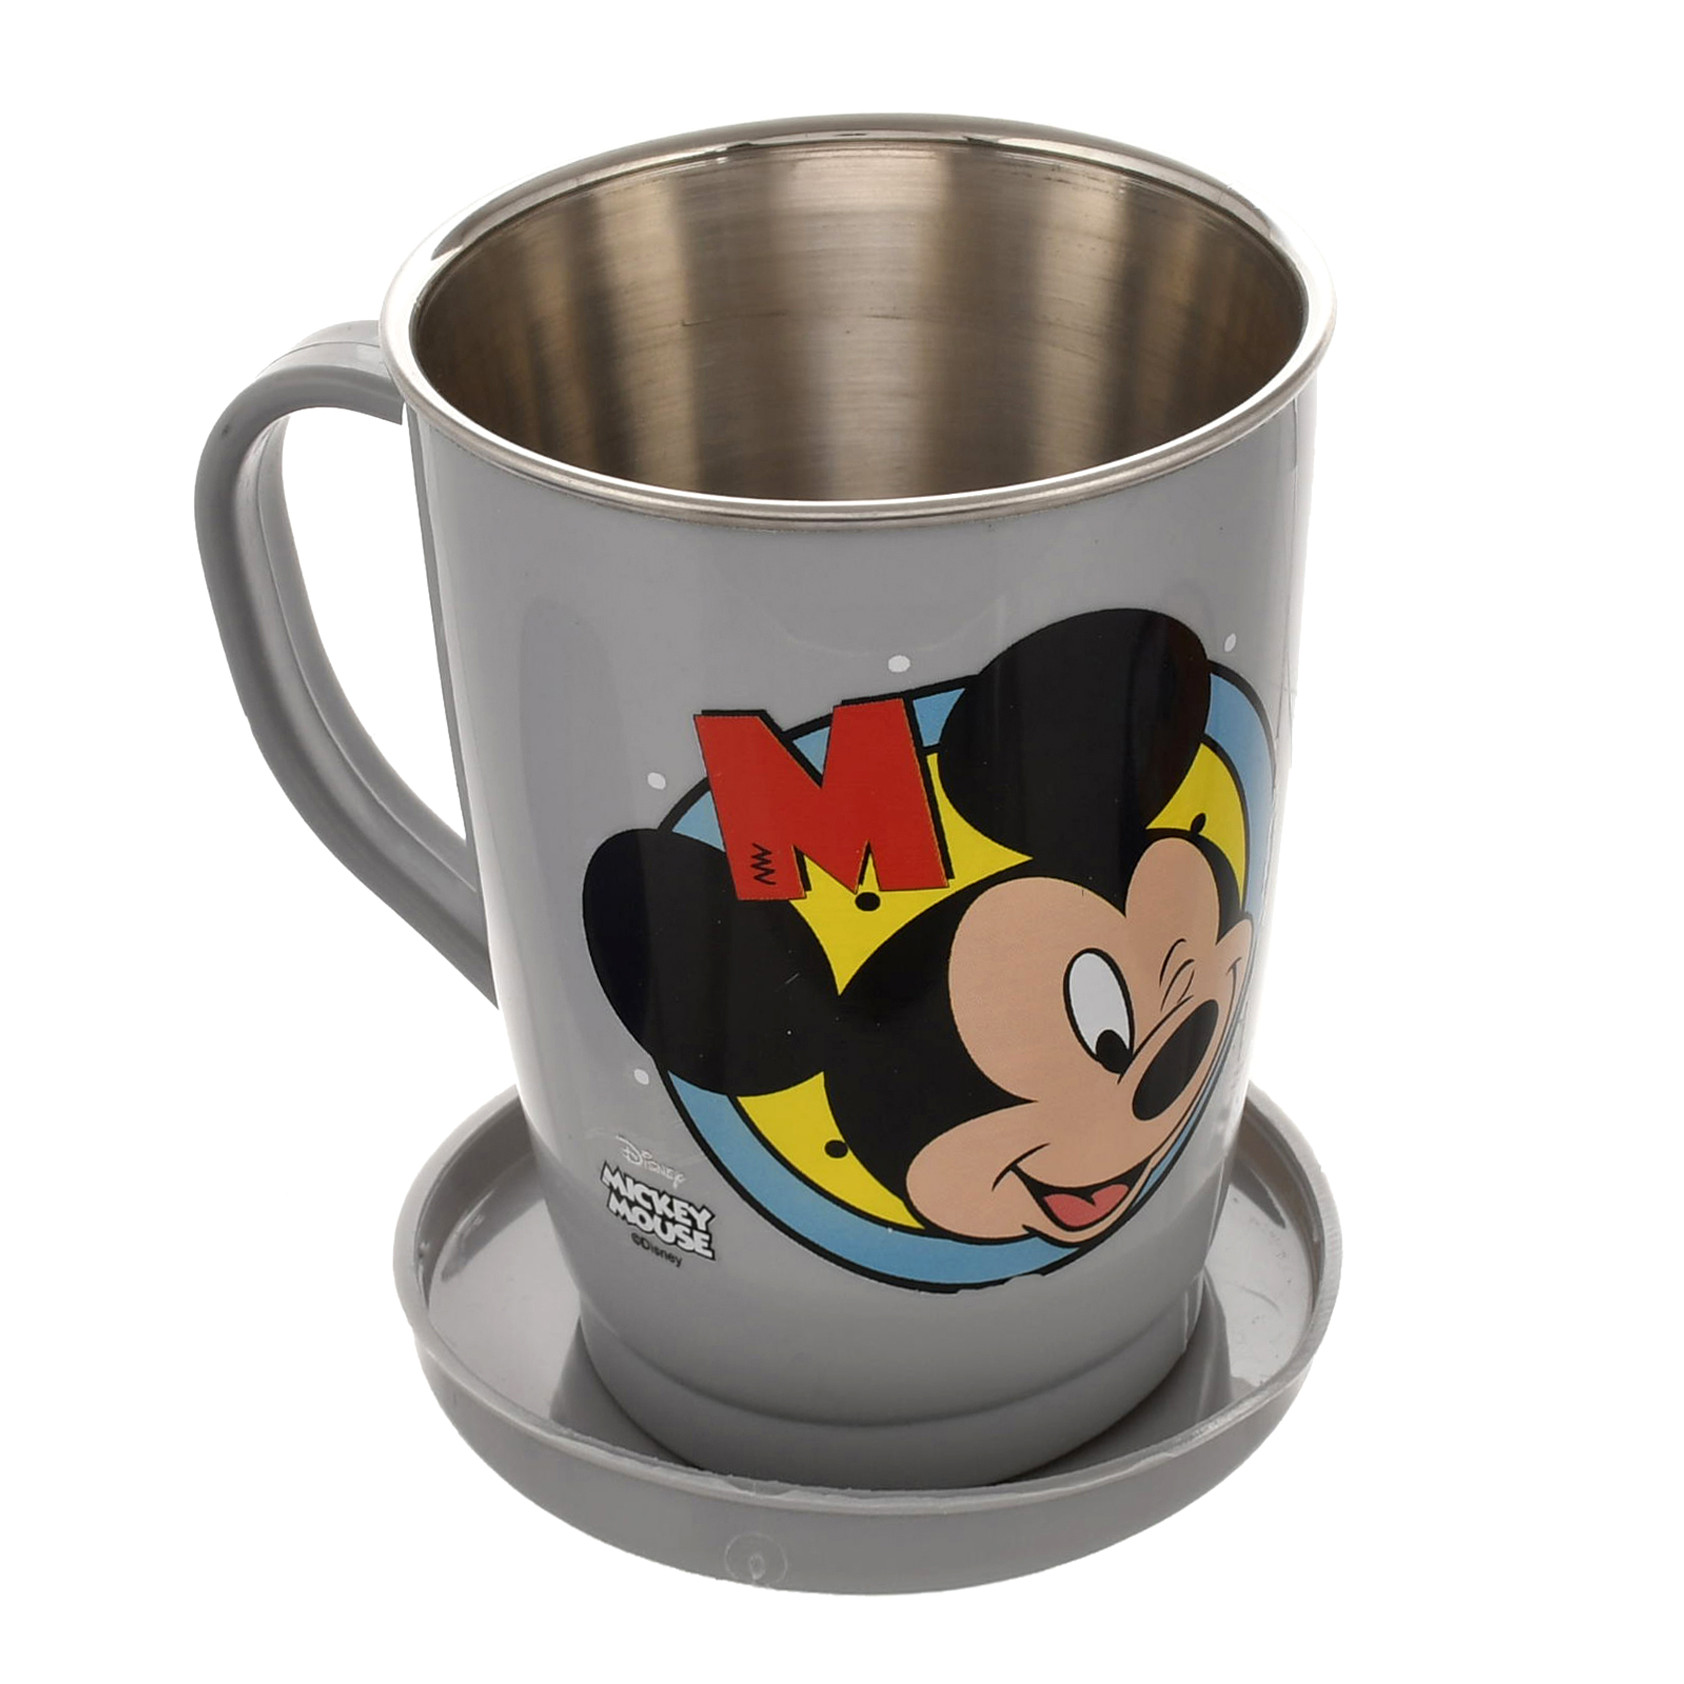 Kuber Industries Mickey Face Printed Food Grade BPA Free Tea/Coffee Mug for Coffee Tea Cocoa, Camping Mugs with Lid,(Light Grey)